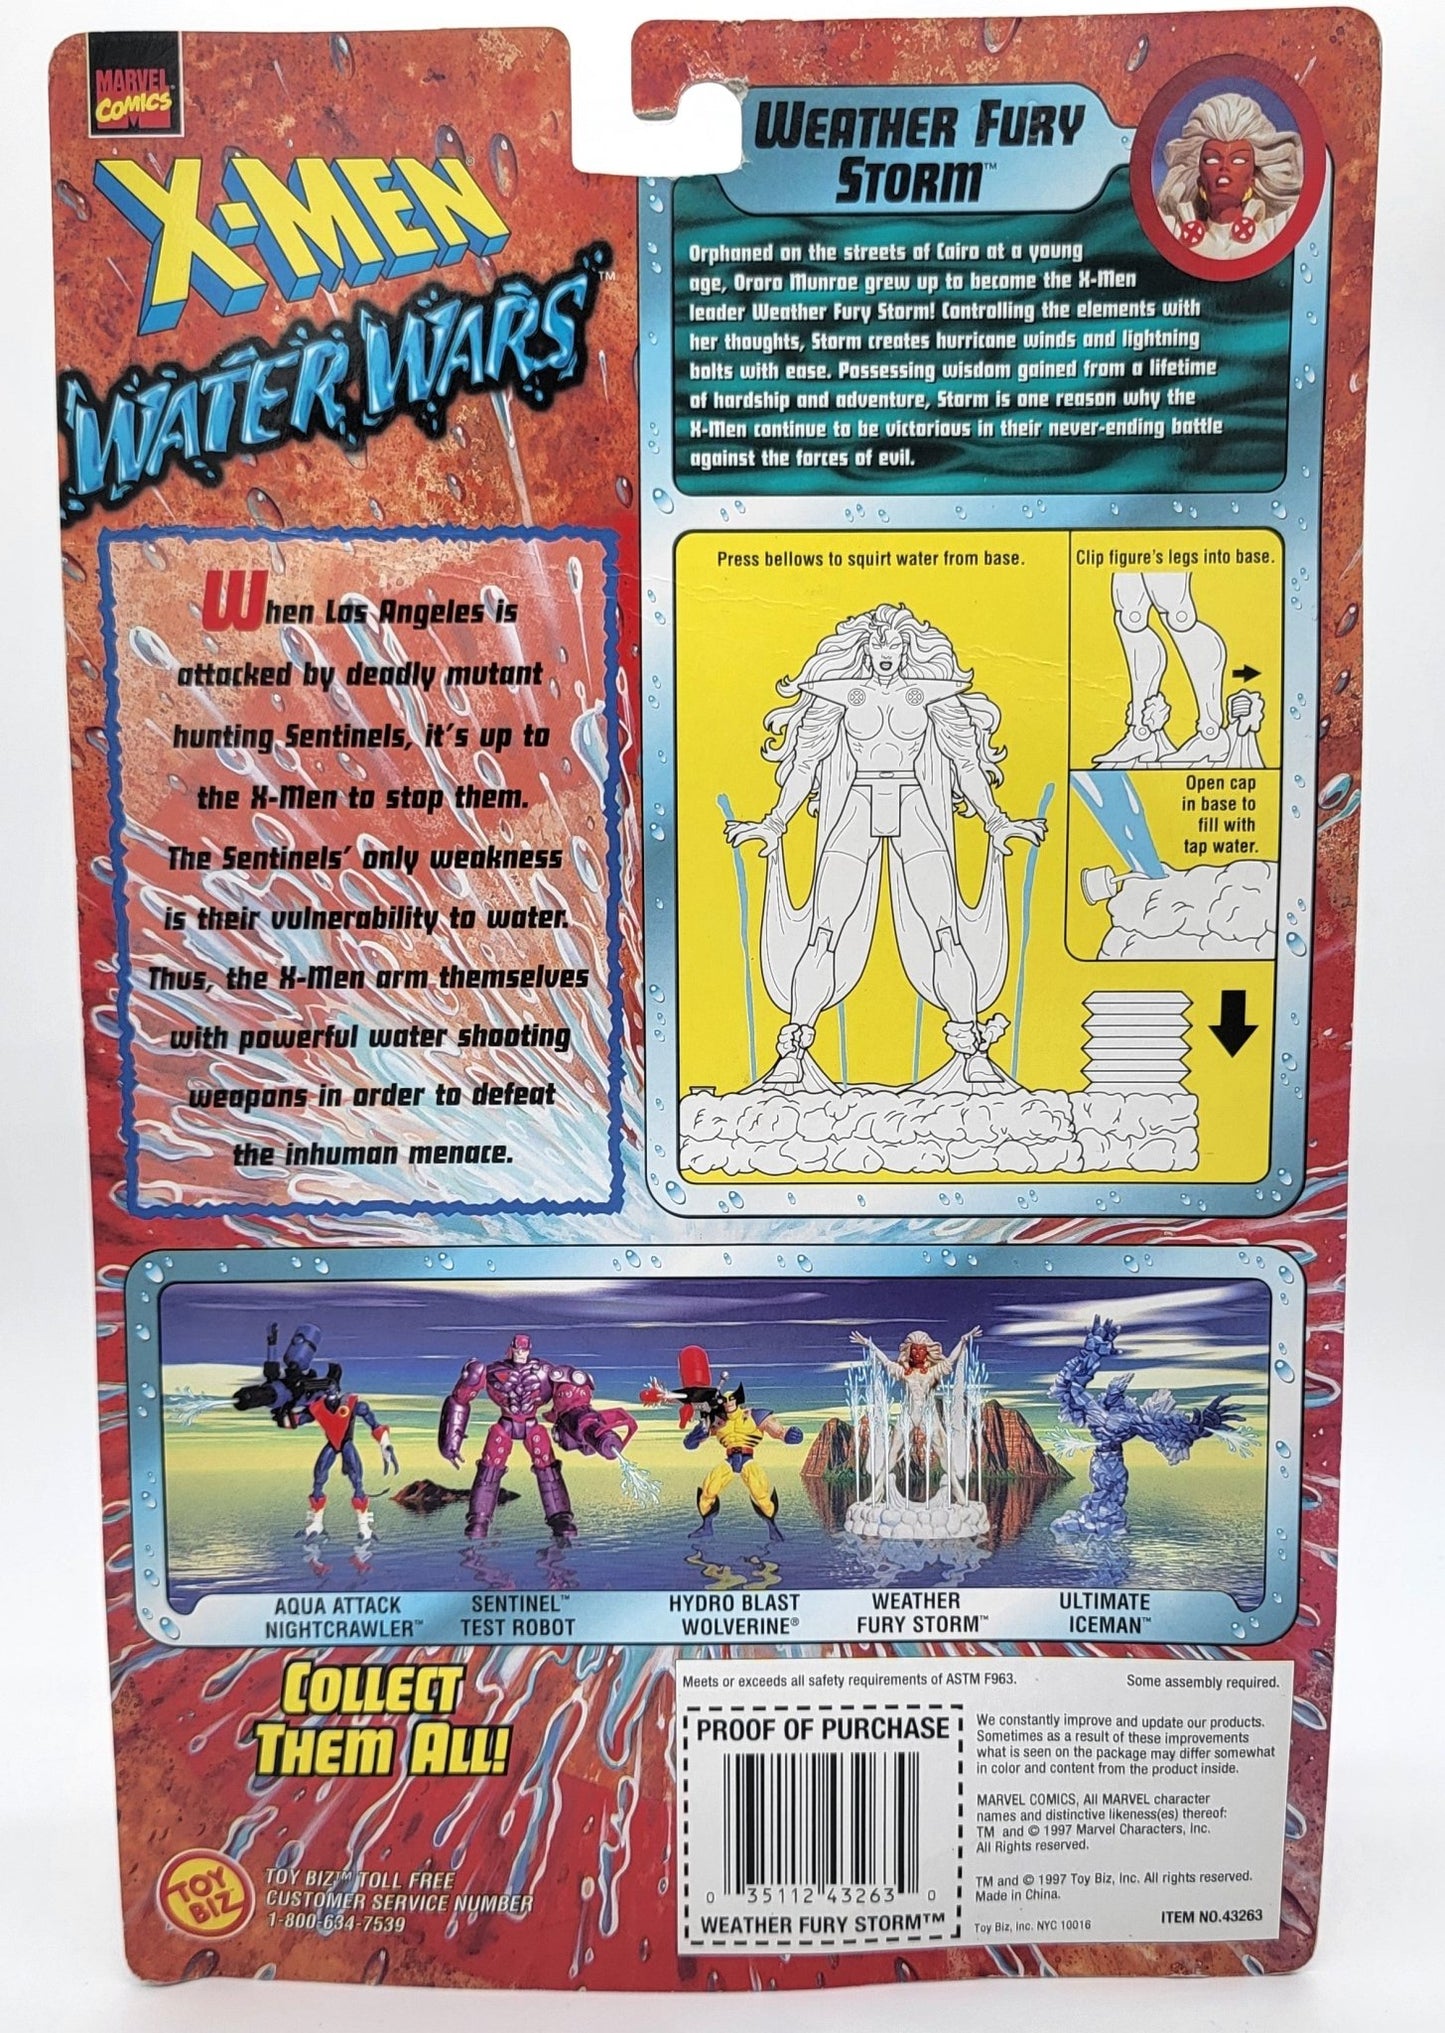 Toy Biz - Toy Biz | X-Men Water Wars - Storm 1997 | Vintage Action Figure - Action Figures - Steady Bunny Shop